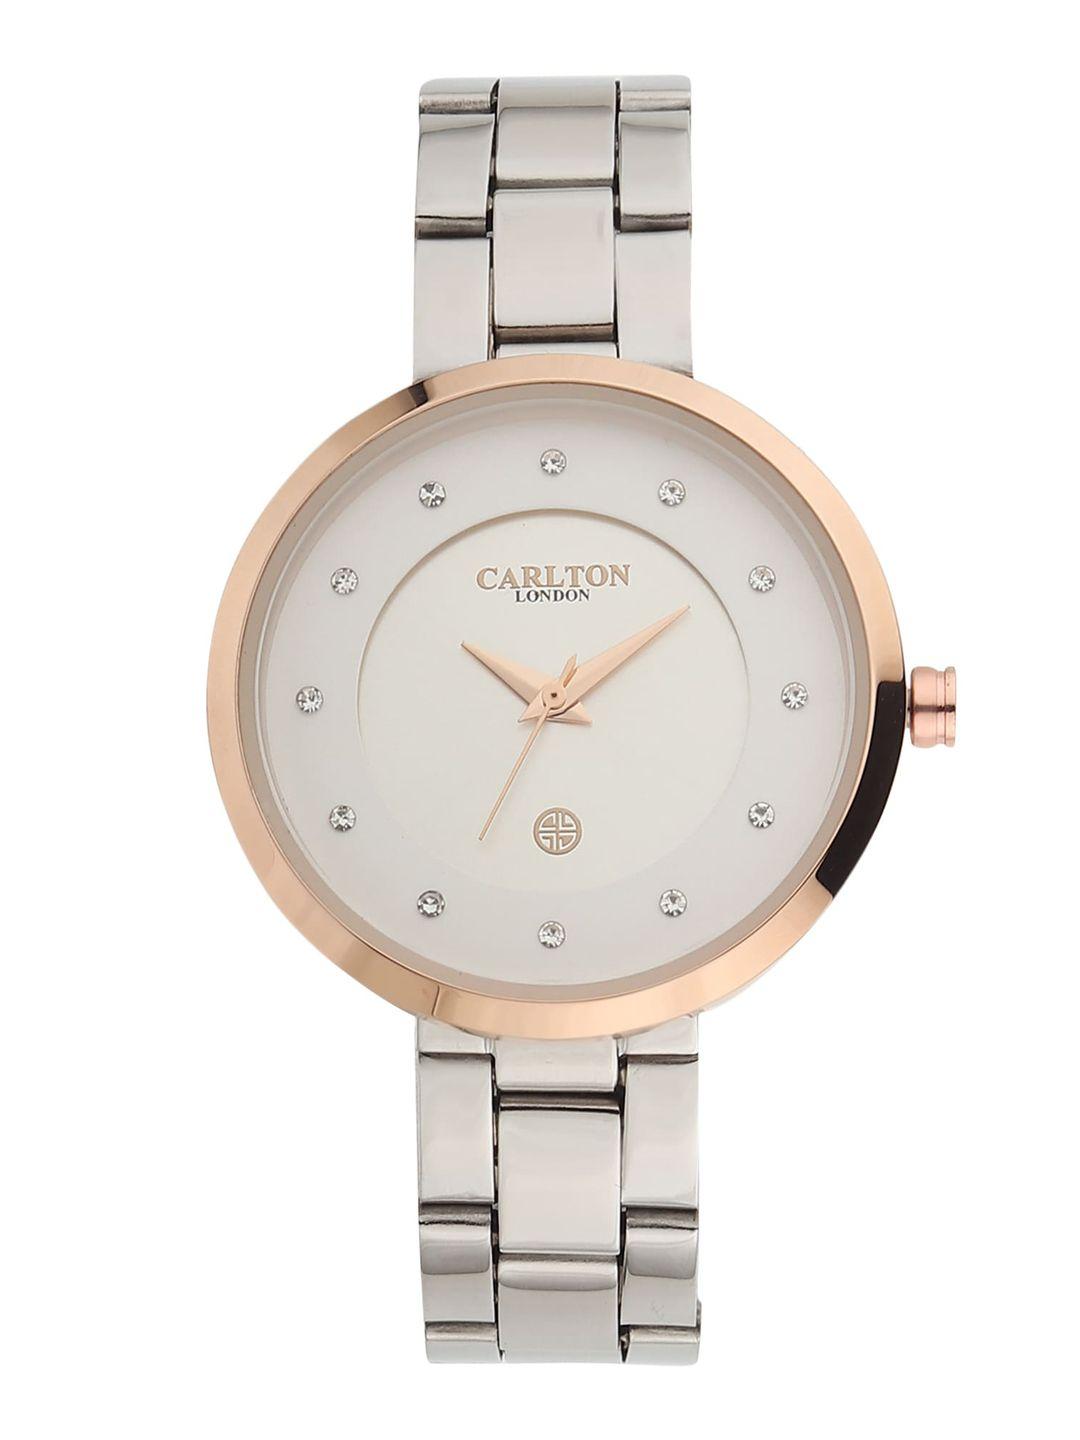 carlton london women silver-toned & white analogue watch